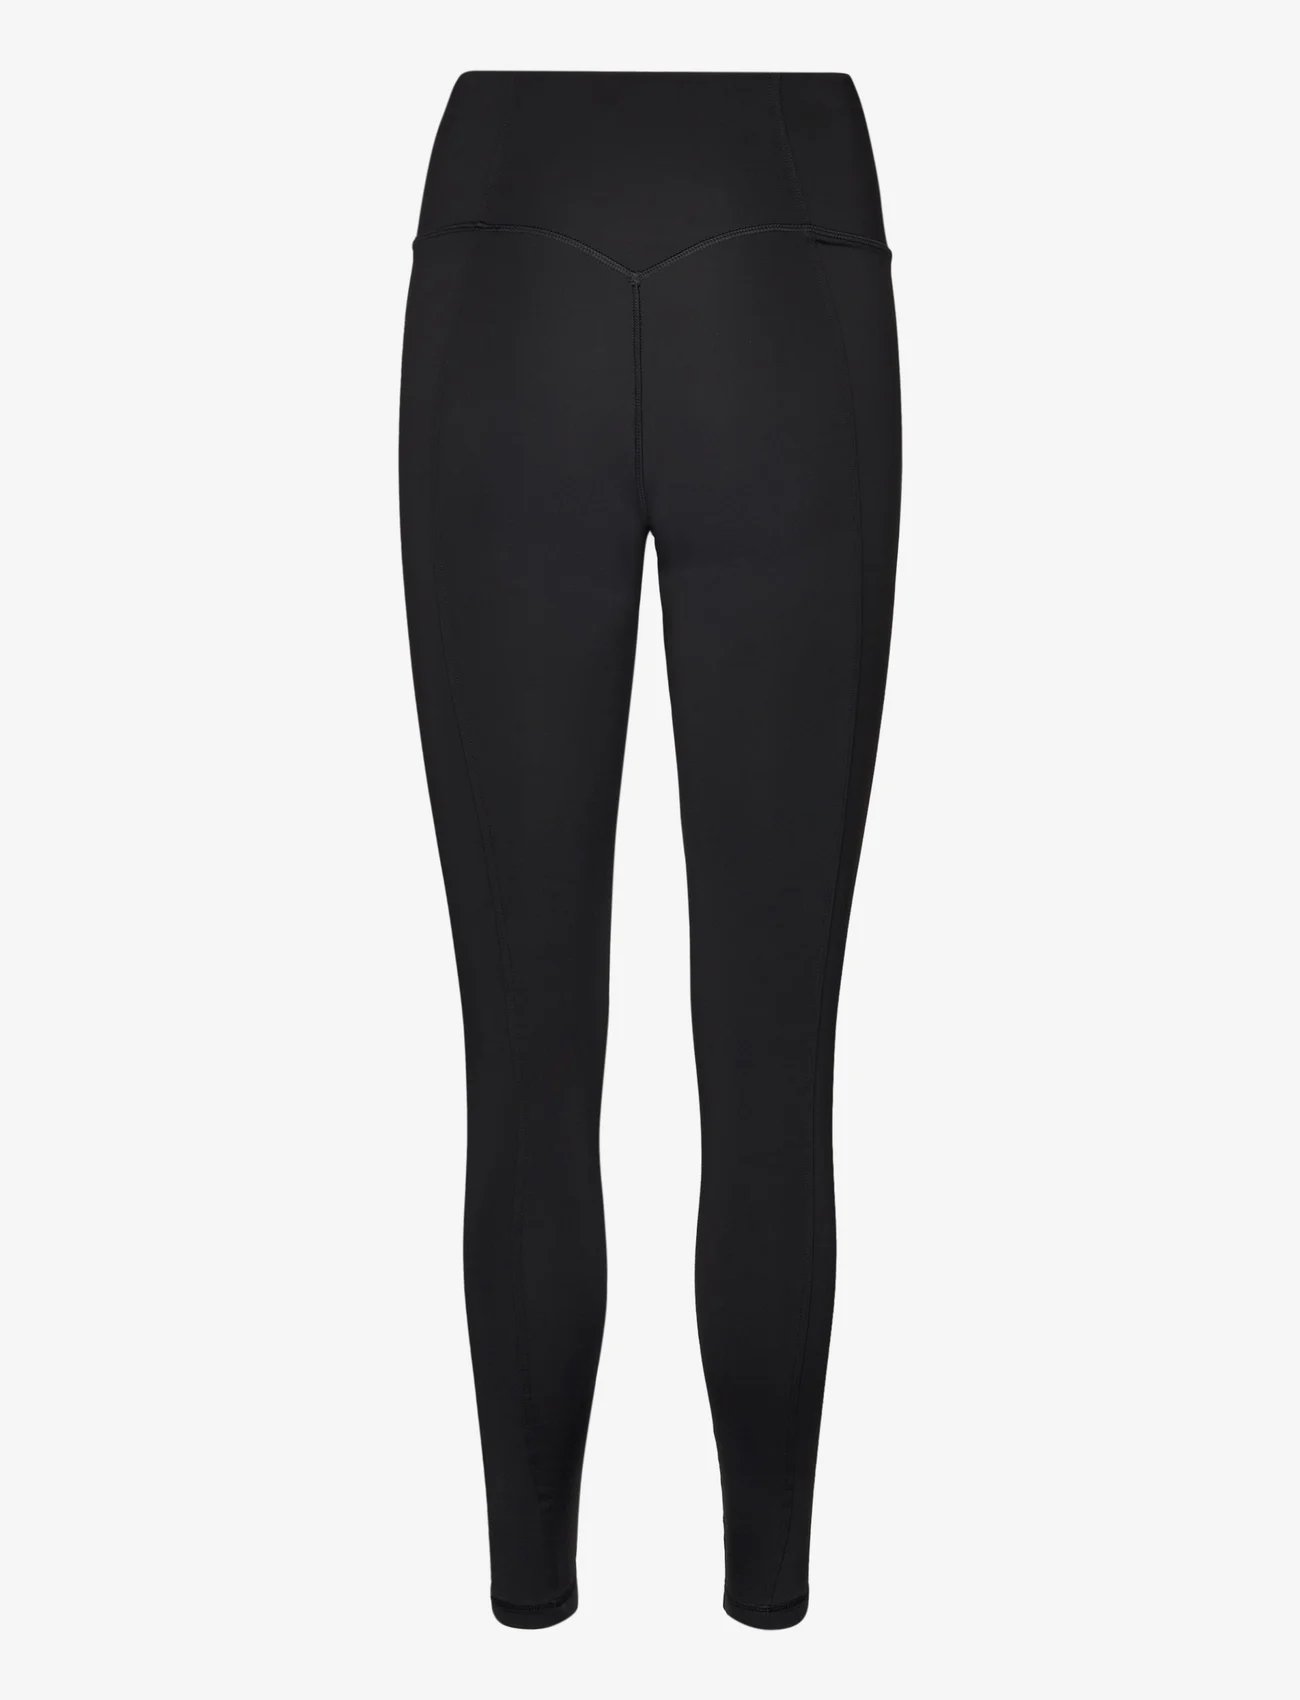 AIM'N - Warming Pintuck Tights - leggings - black - 1